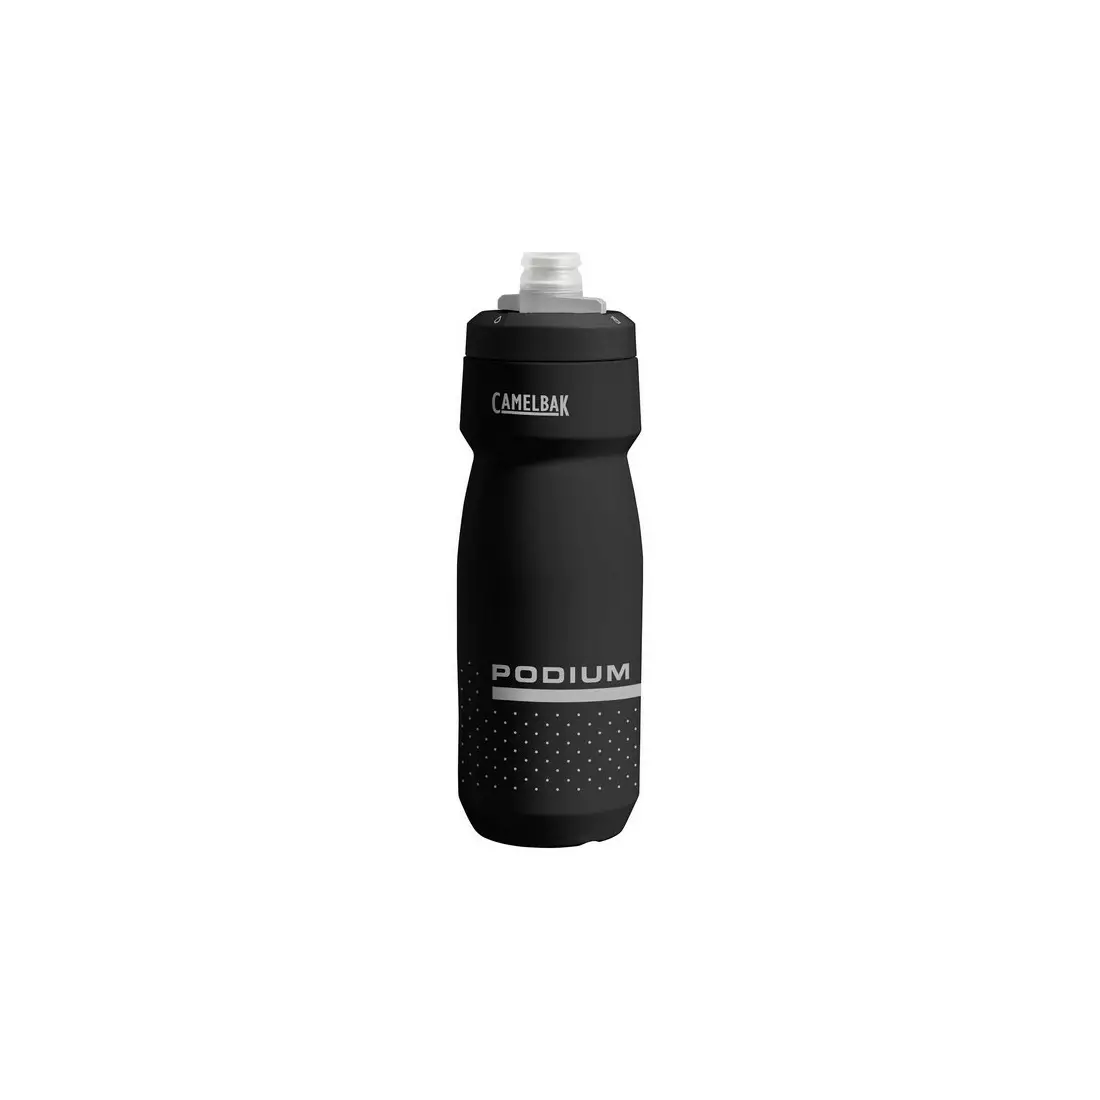 CAMELBAK fľaša na vodu s bicyklom Podium 710ml c1875/001071/UNI